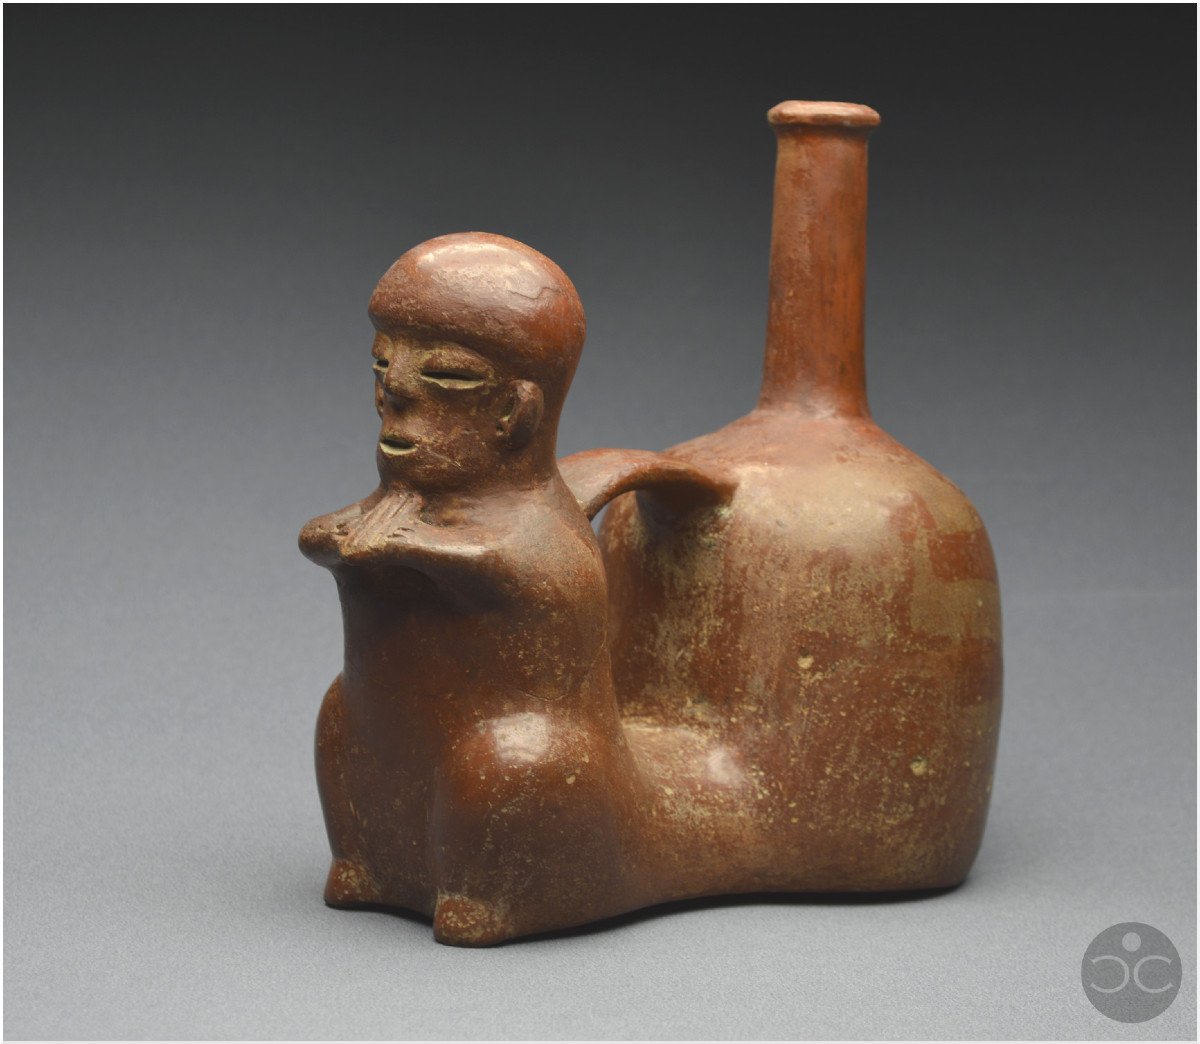 Équateur, 1000 - 500 av J.-C, Culture Chorrera, Vase rituel anthropomorphe, Céramique vernissée